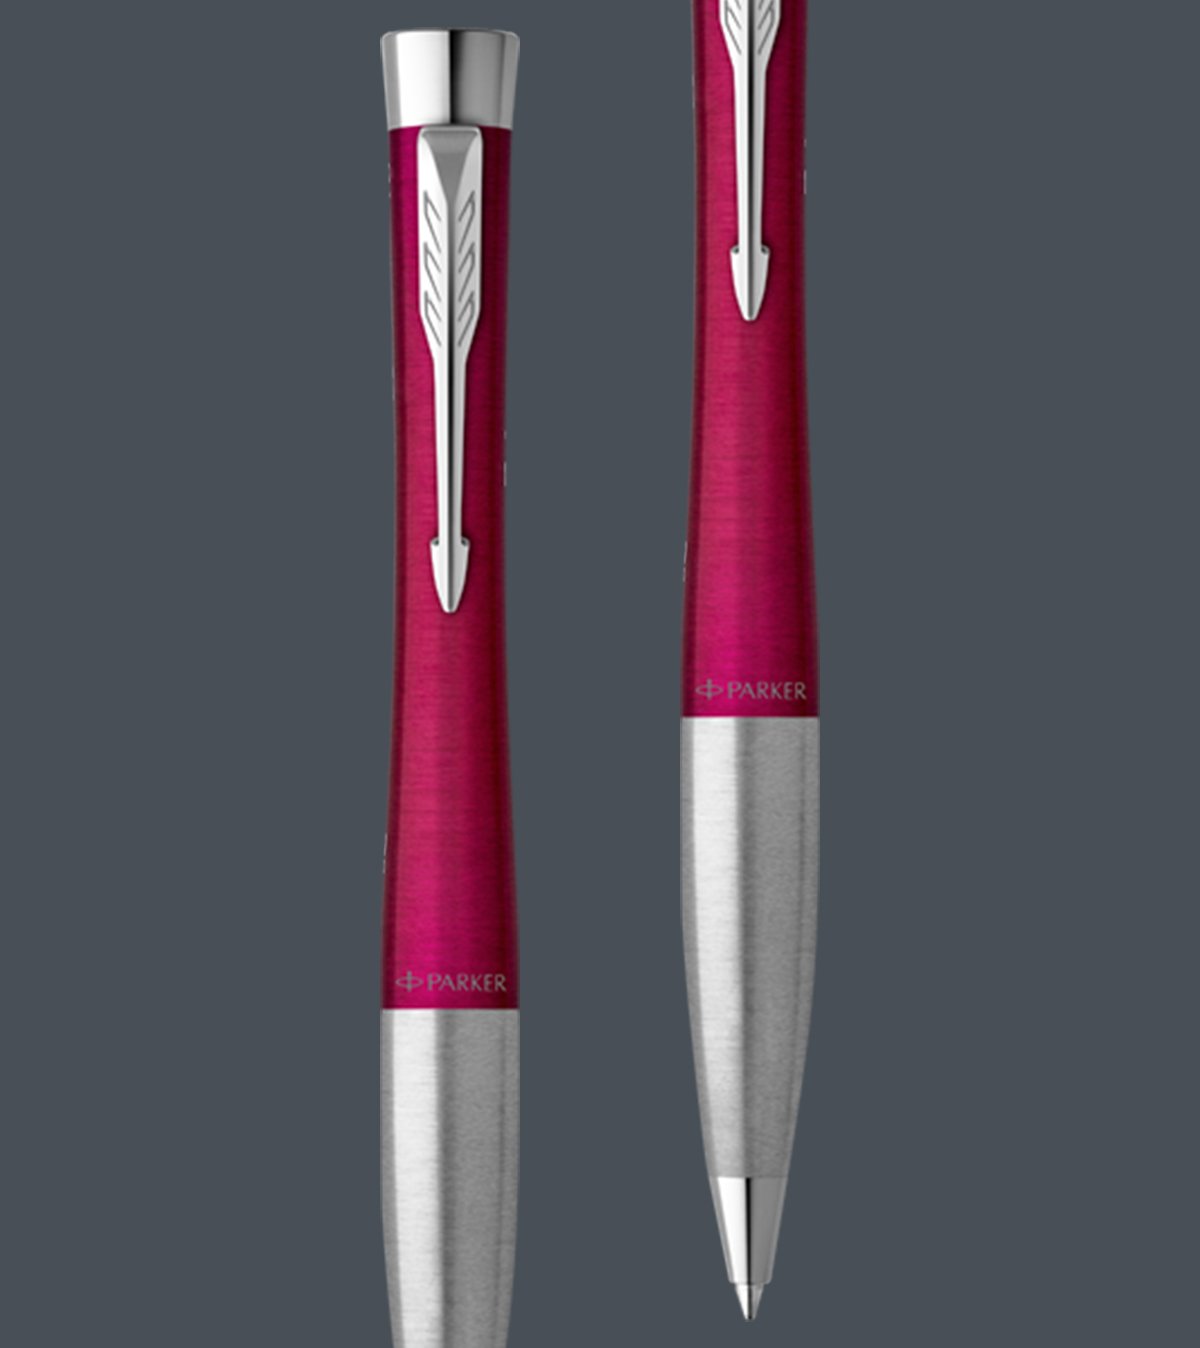 Two upright Urban ballpoint pens with chrome trim.